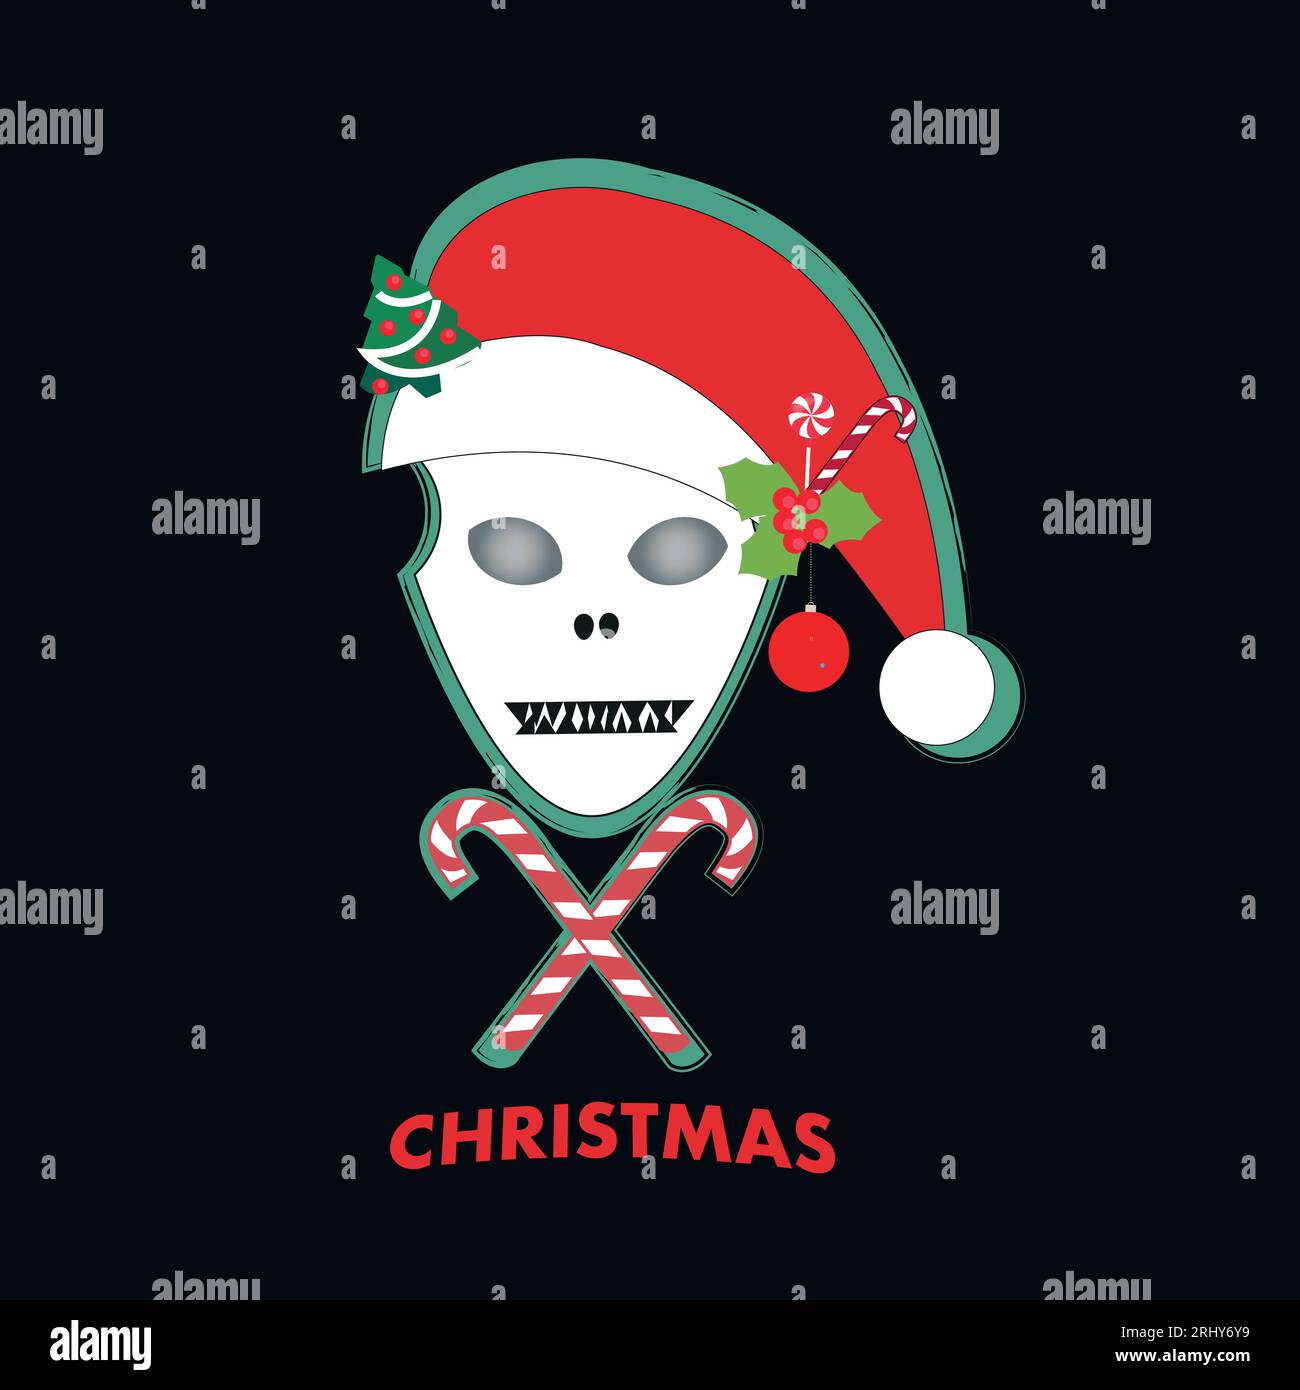 Christmas skull illustration Happy new year design Stock Vector